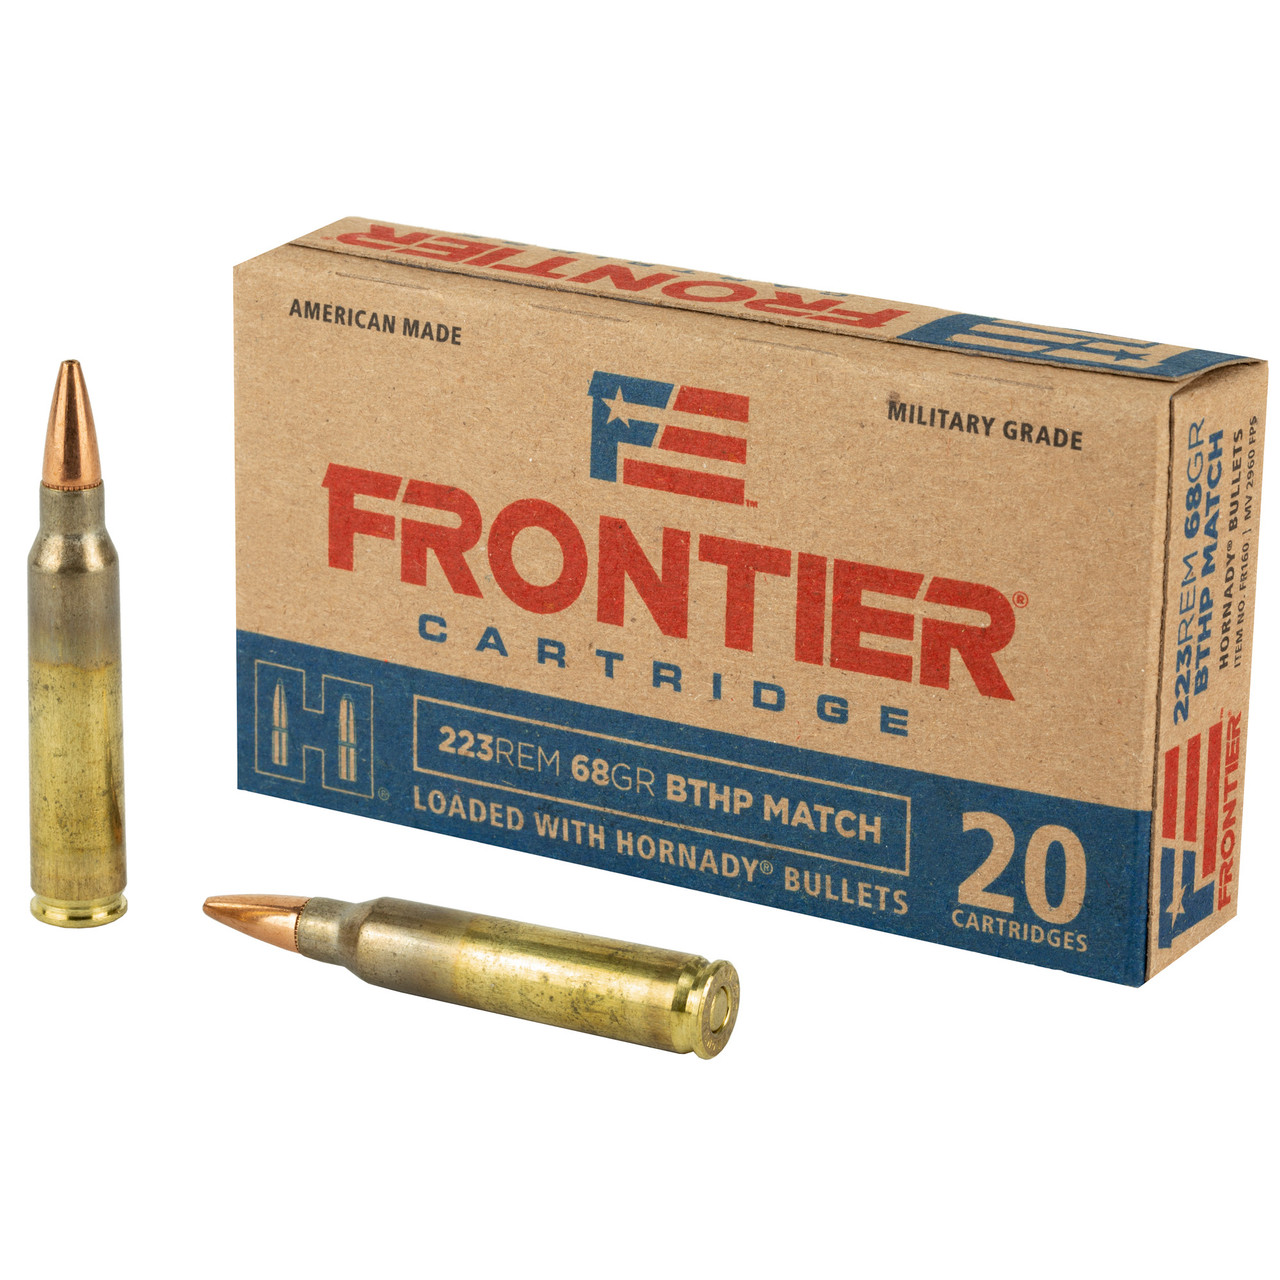 Frontier Cartridge FR160 223rem 68gr Bthp Mtch 20